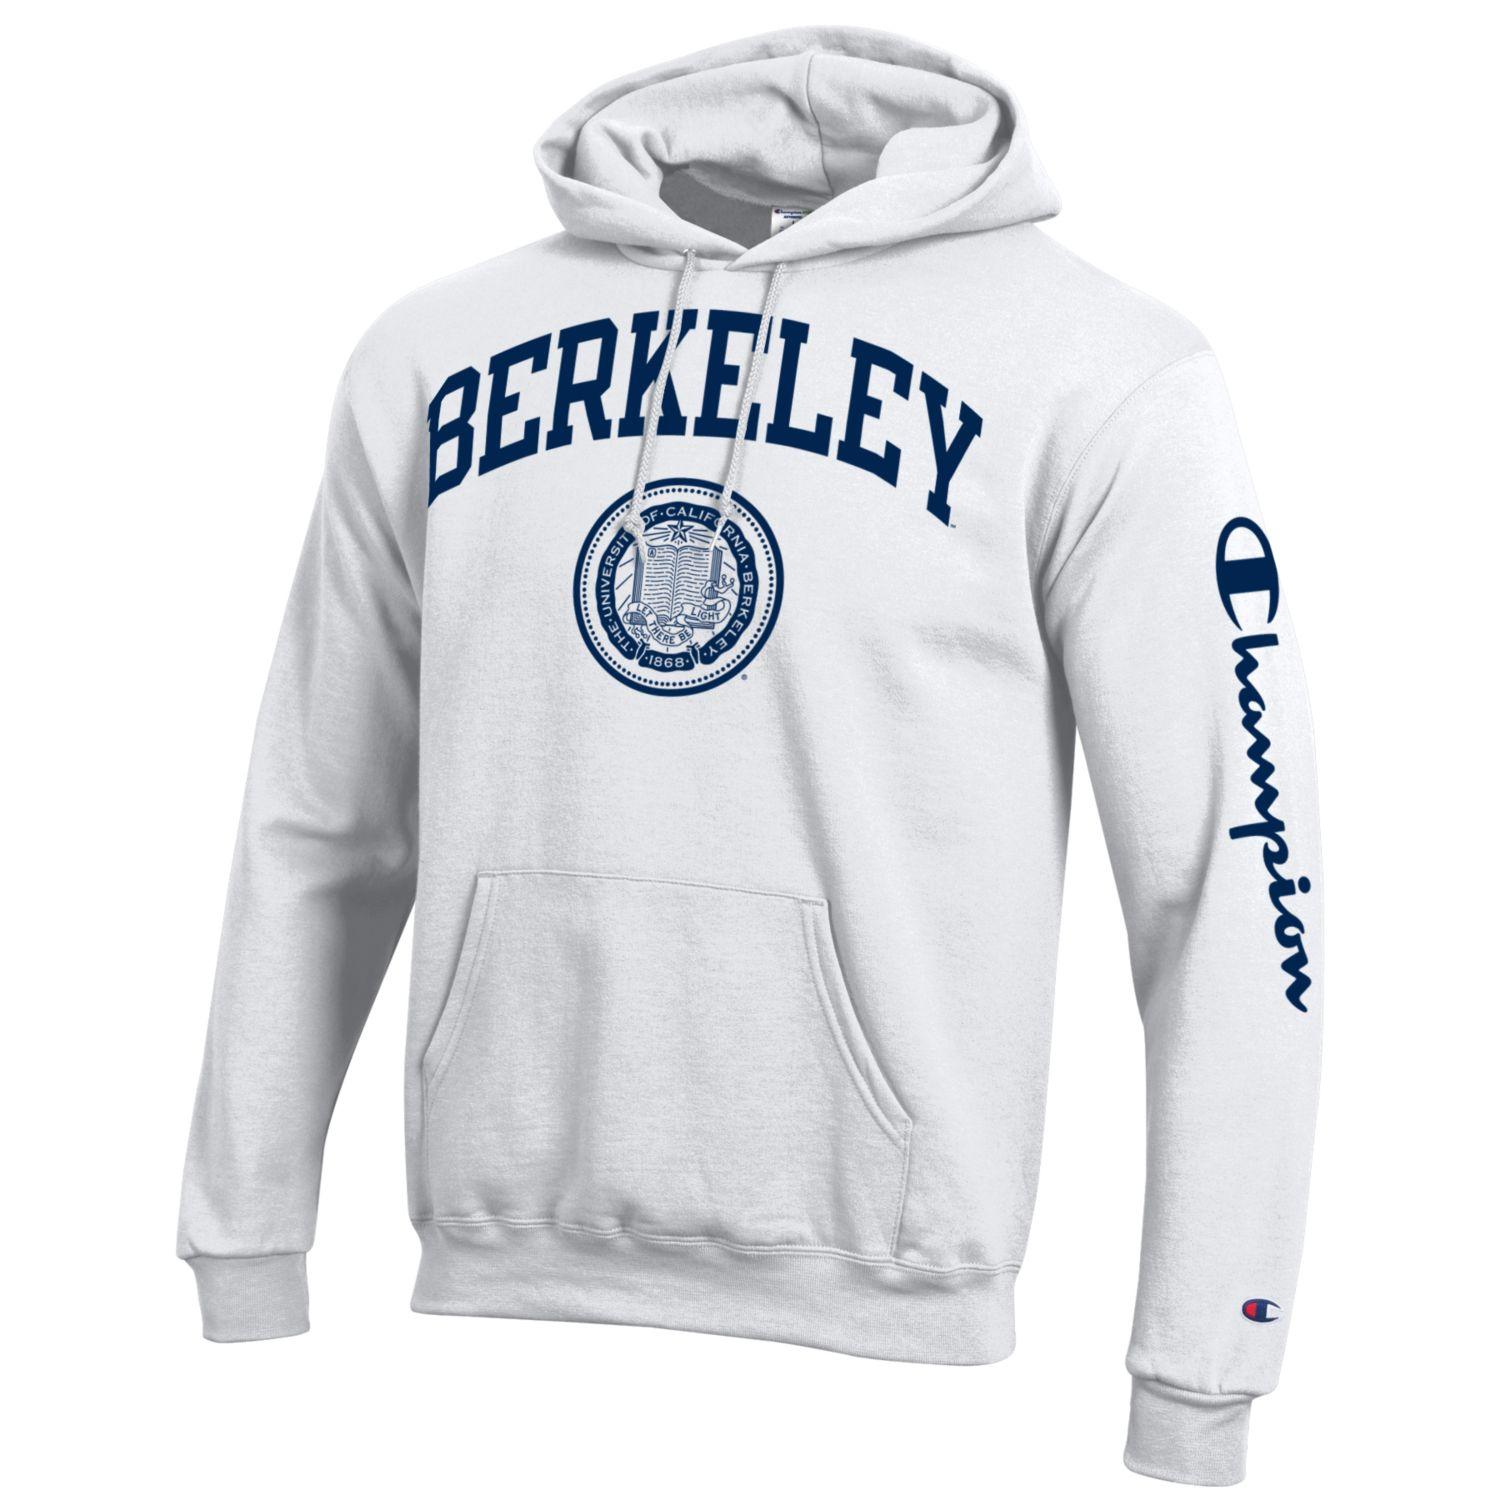 U.C. Berkeley Cal Champion hoodie sweatshirt-White-Shop College Wear